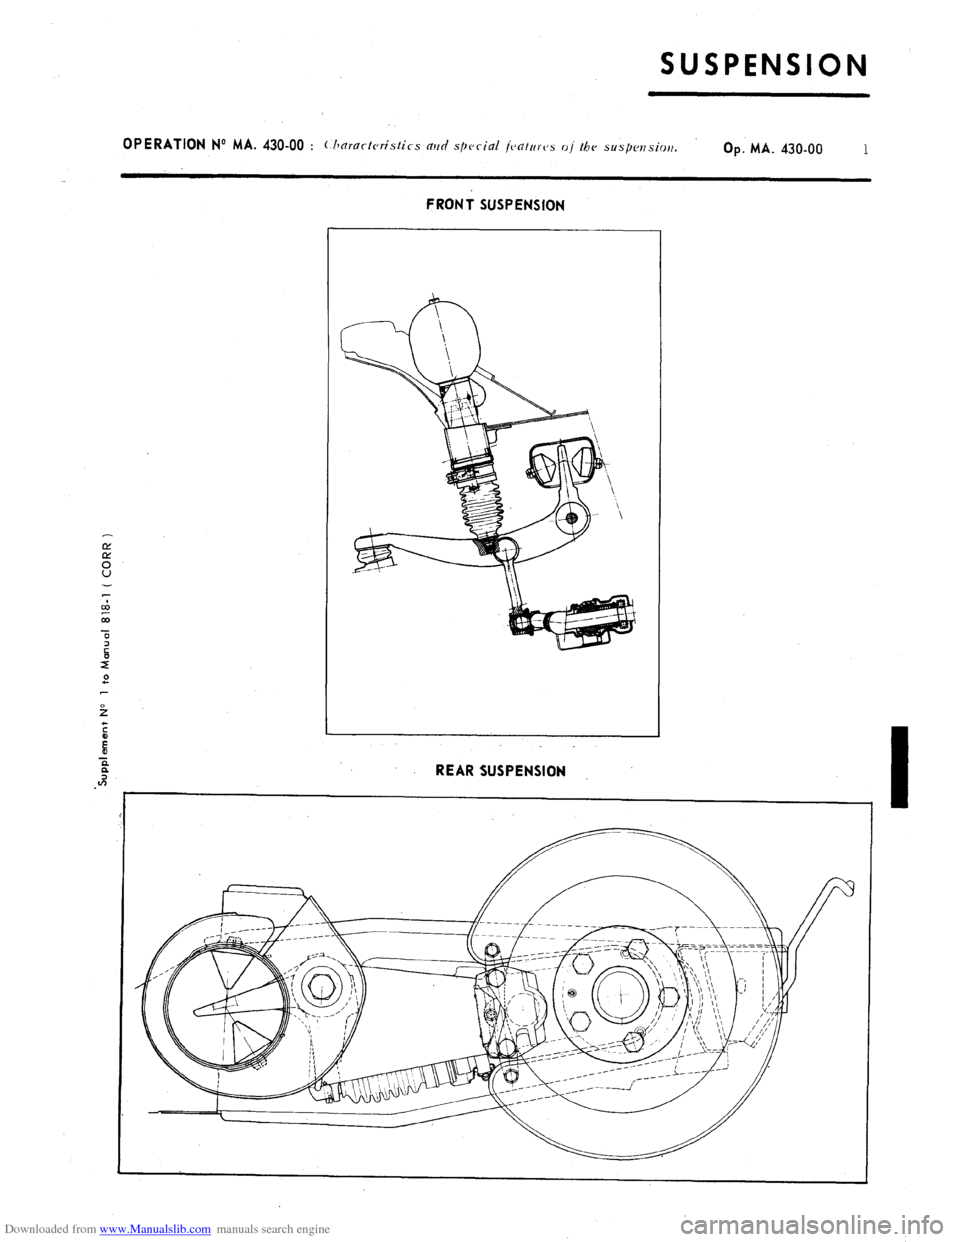 Citroen CX 1985 1.G Workshop Manual Downloaded from www.Manualslib.com manuals search engine SUSPENSION 
OPERATION No MA. 430-00 : ( hnmrtcristics mrd spccinl jeatrrres oj /ha susp~~sio~~. Op. MA. 430-00 1 
FRONT SUSPENSION 
f 
c 
s 
6 